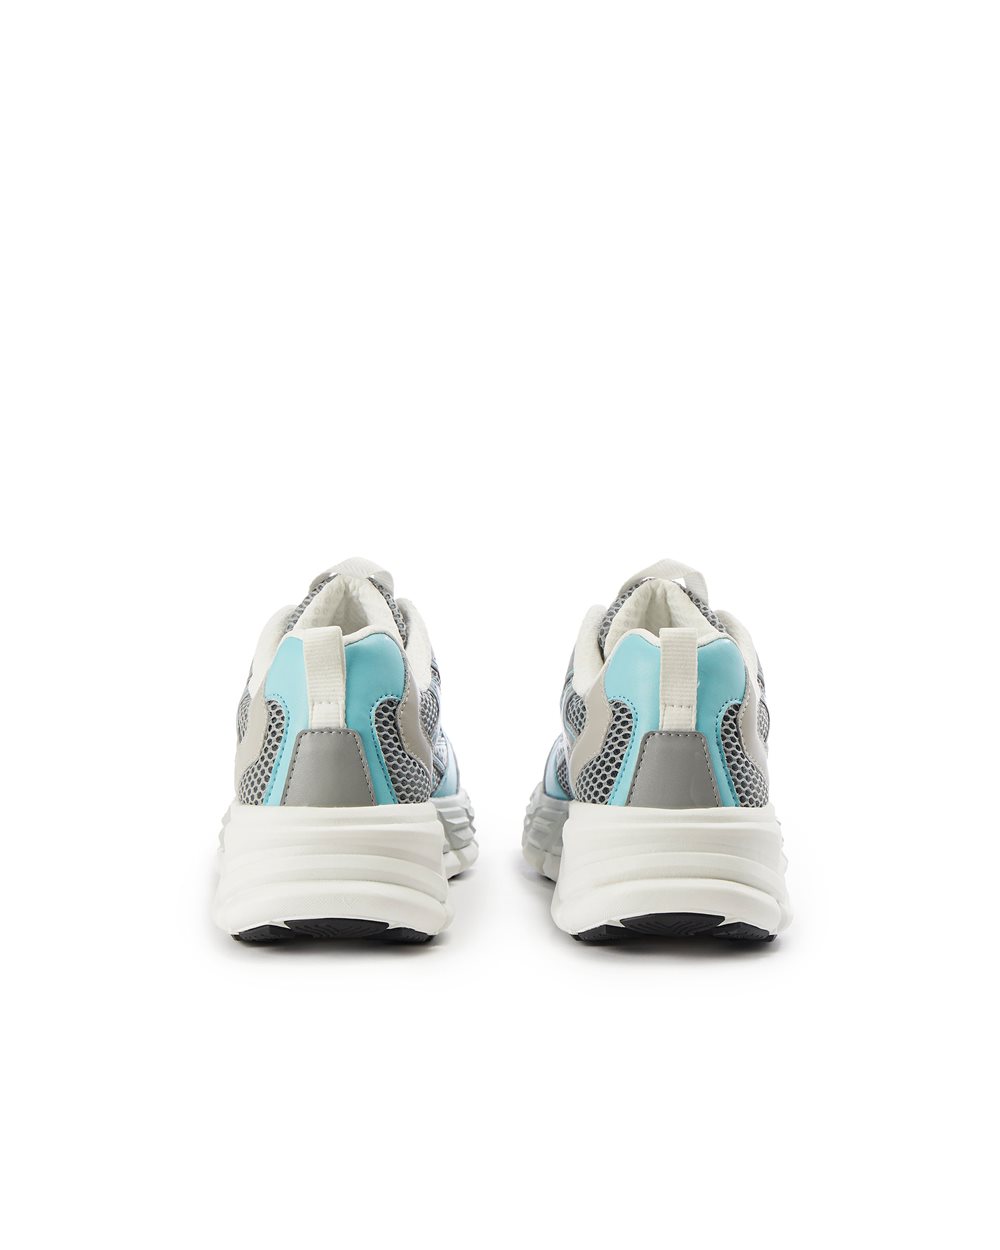 Spyder Look sneakers - Iceberg - Official Website